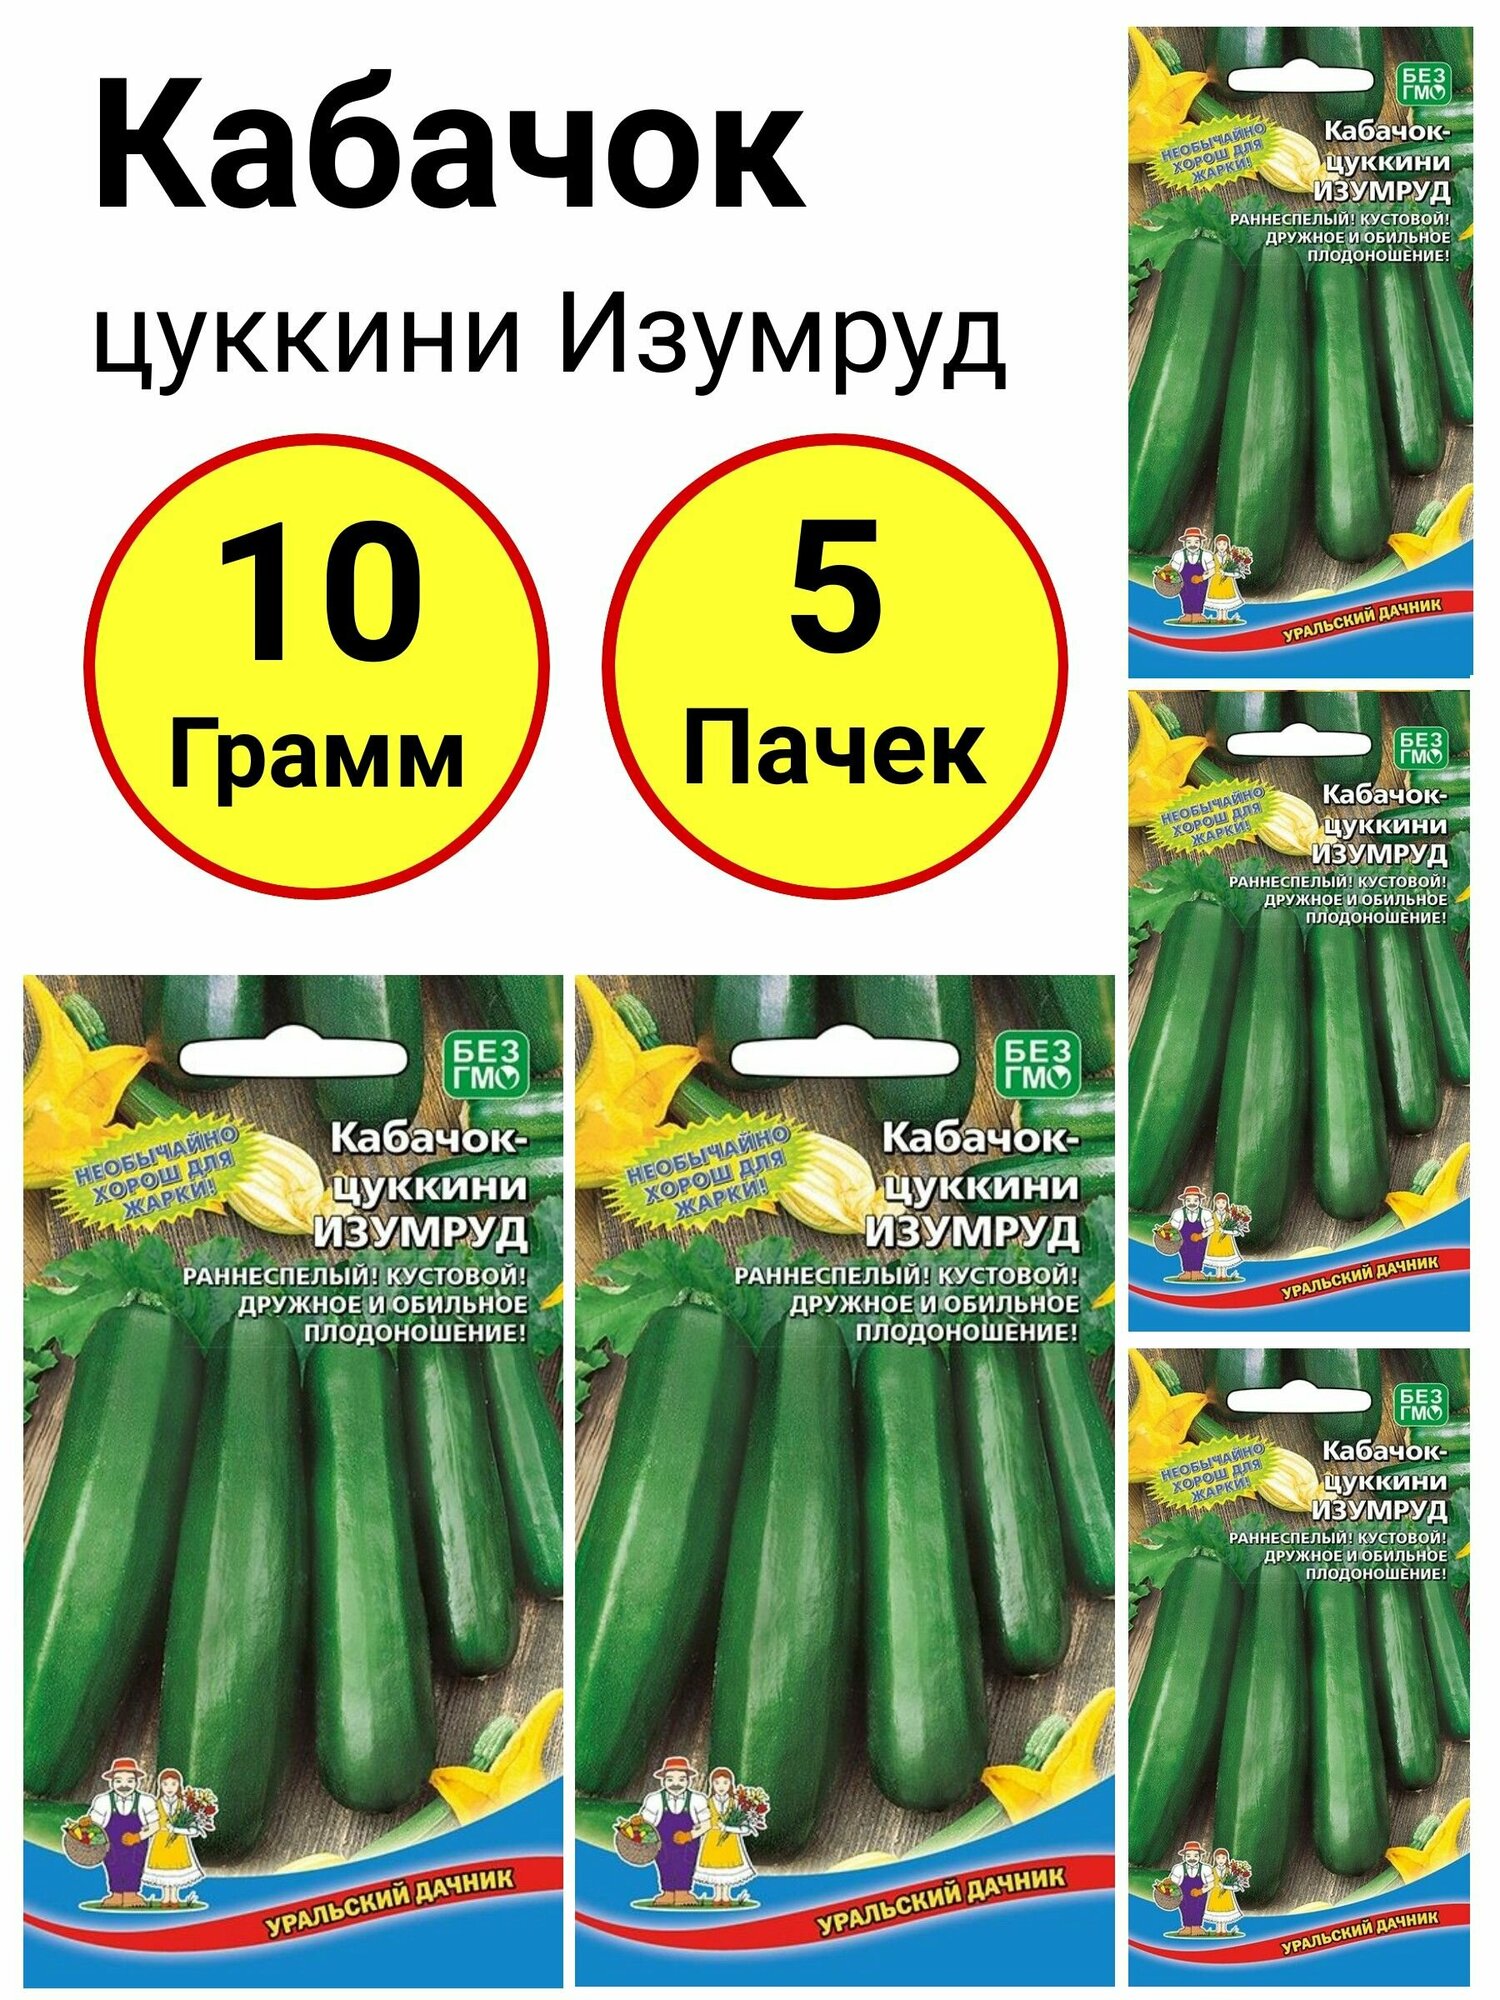 Кабачок цуккини Изумруд 2 грамма Уральский дачник - 5 пачек